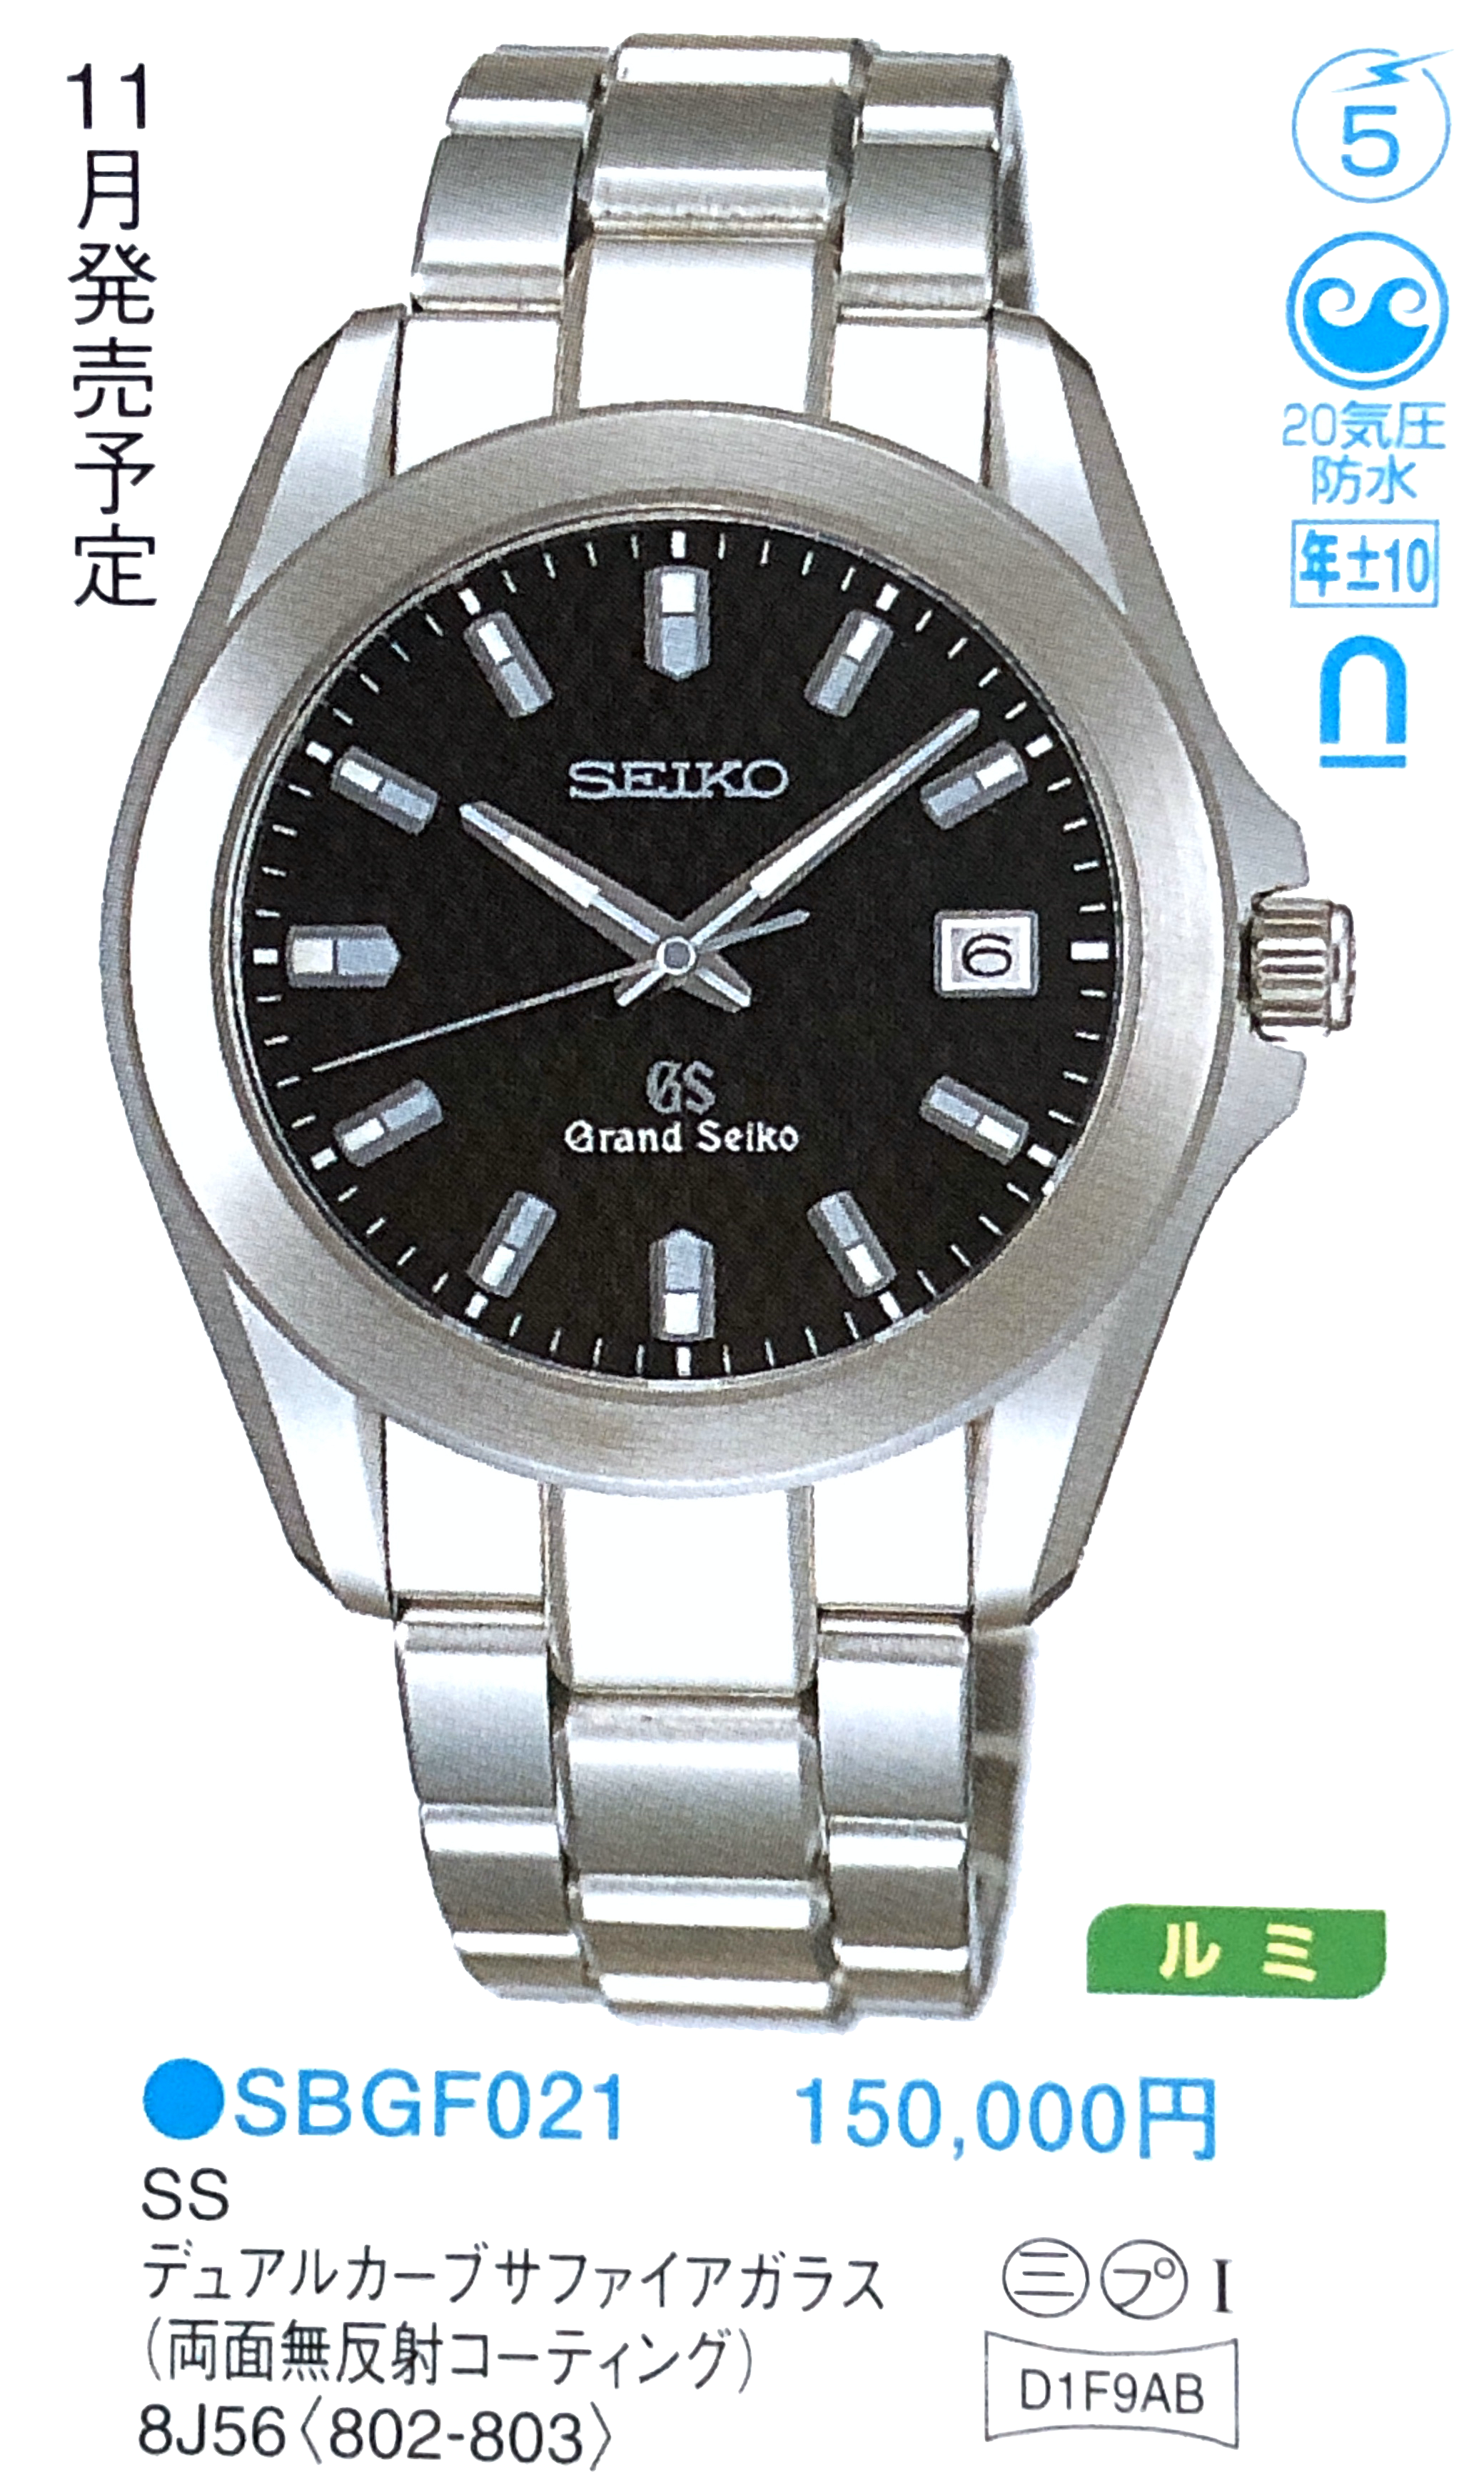 Grand Seiko 8J56-8020 SBGF021 Black Tatami (Sold)